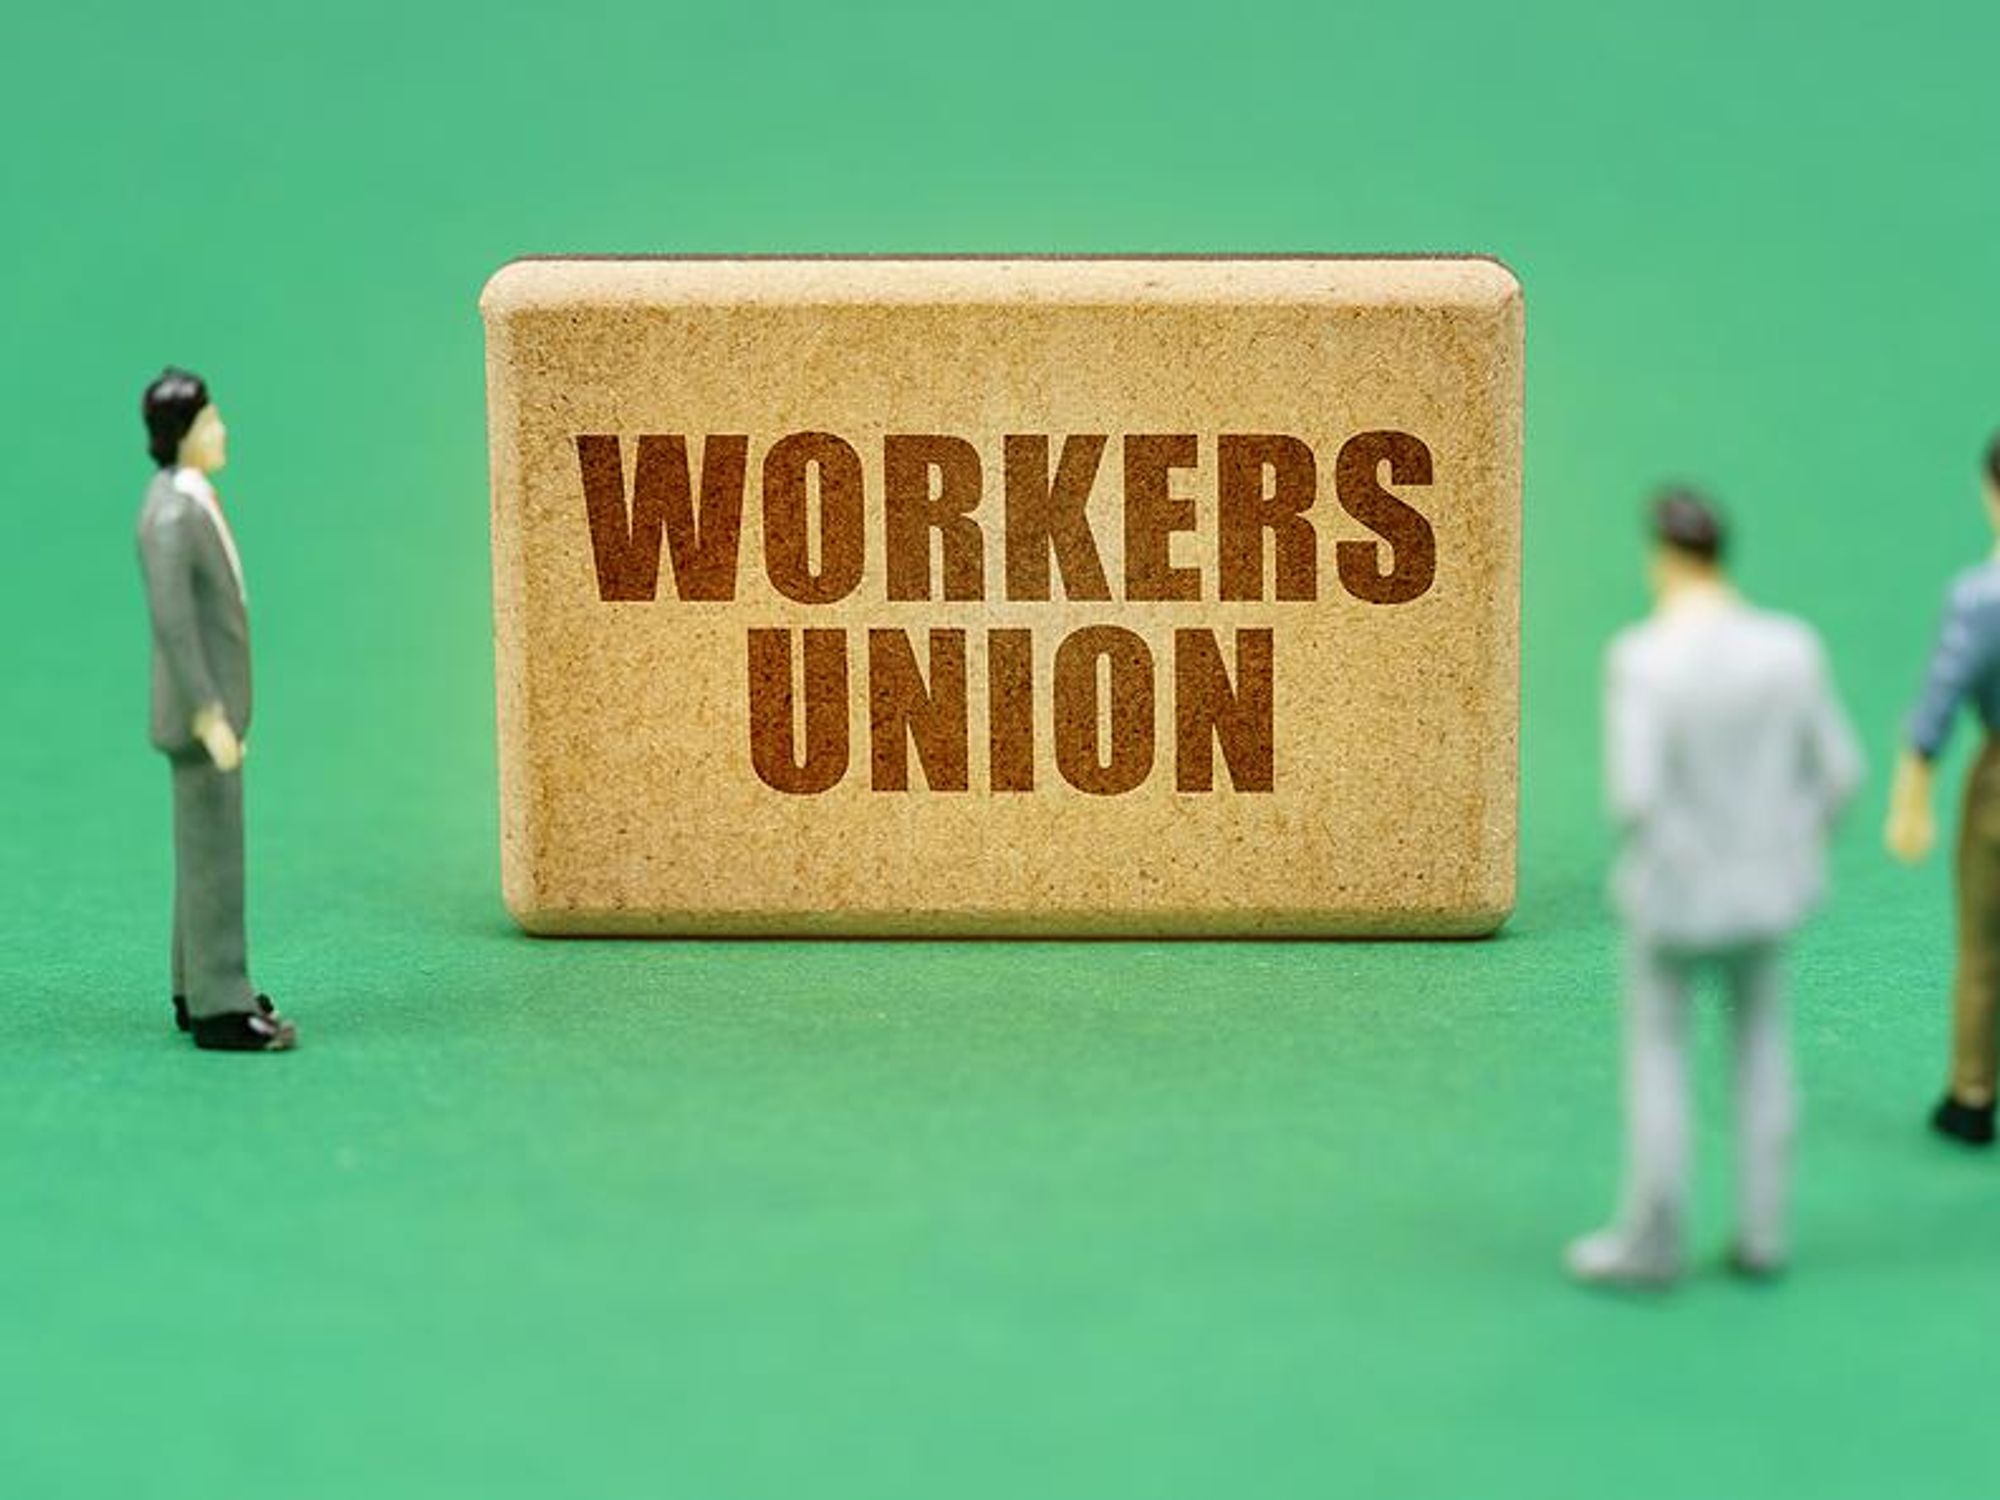 Workers union, labor union concept